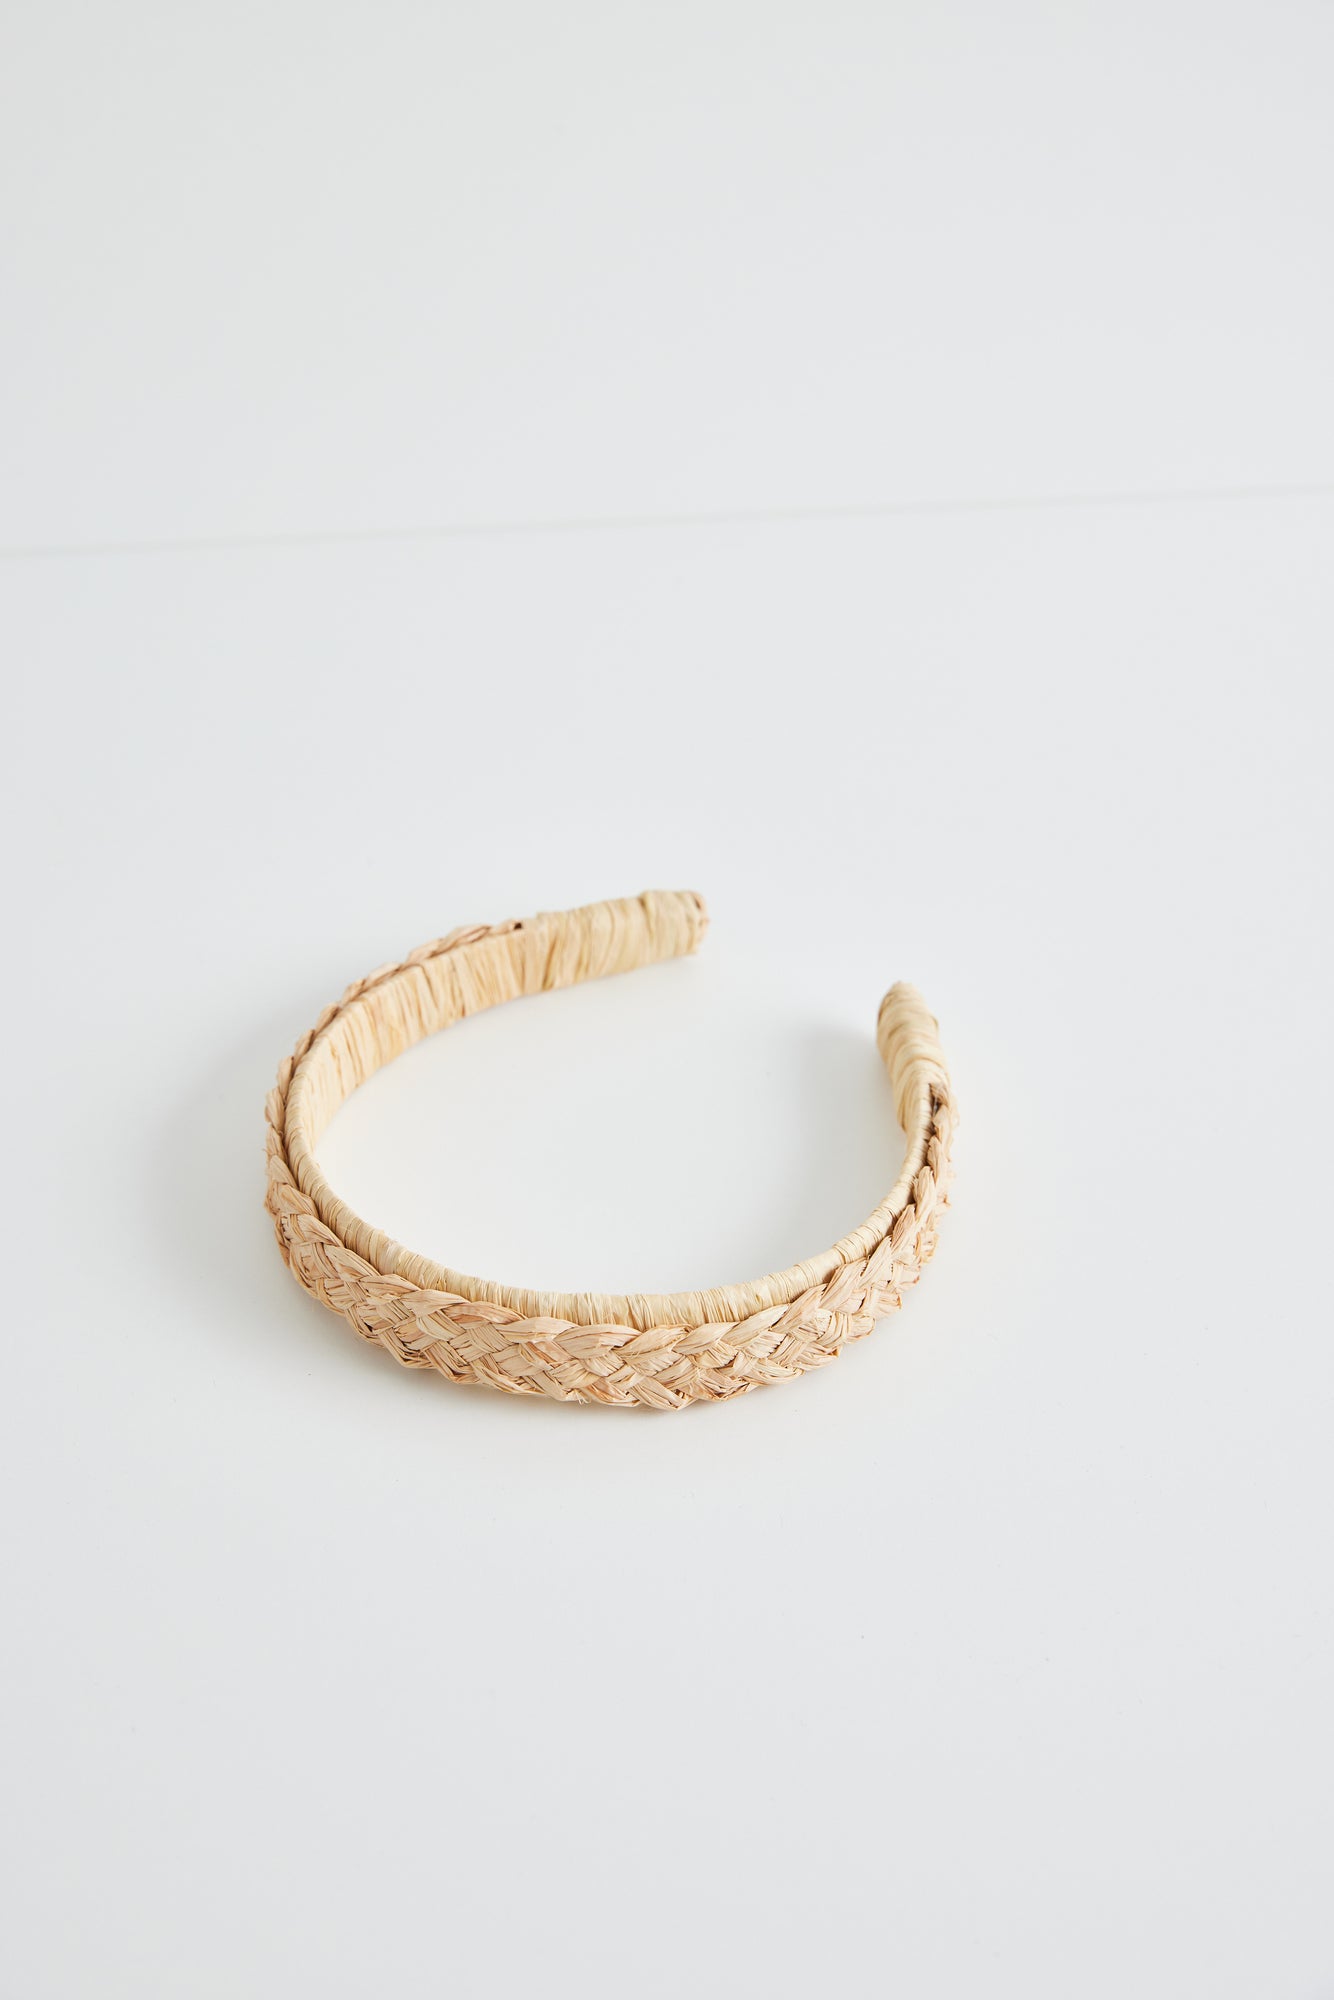 Dubuffet - Straw headband